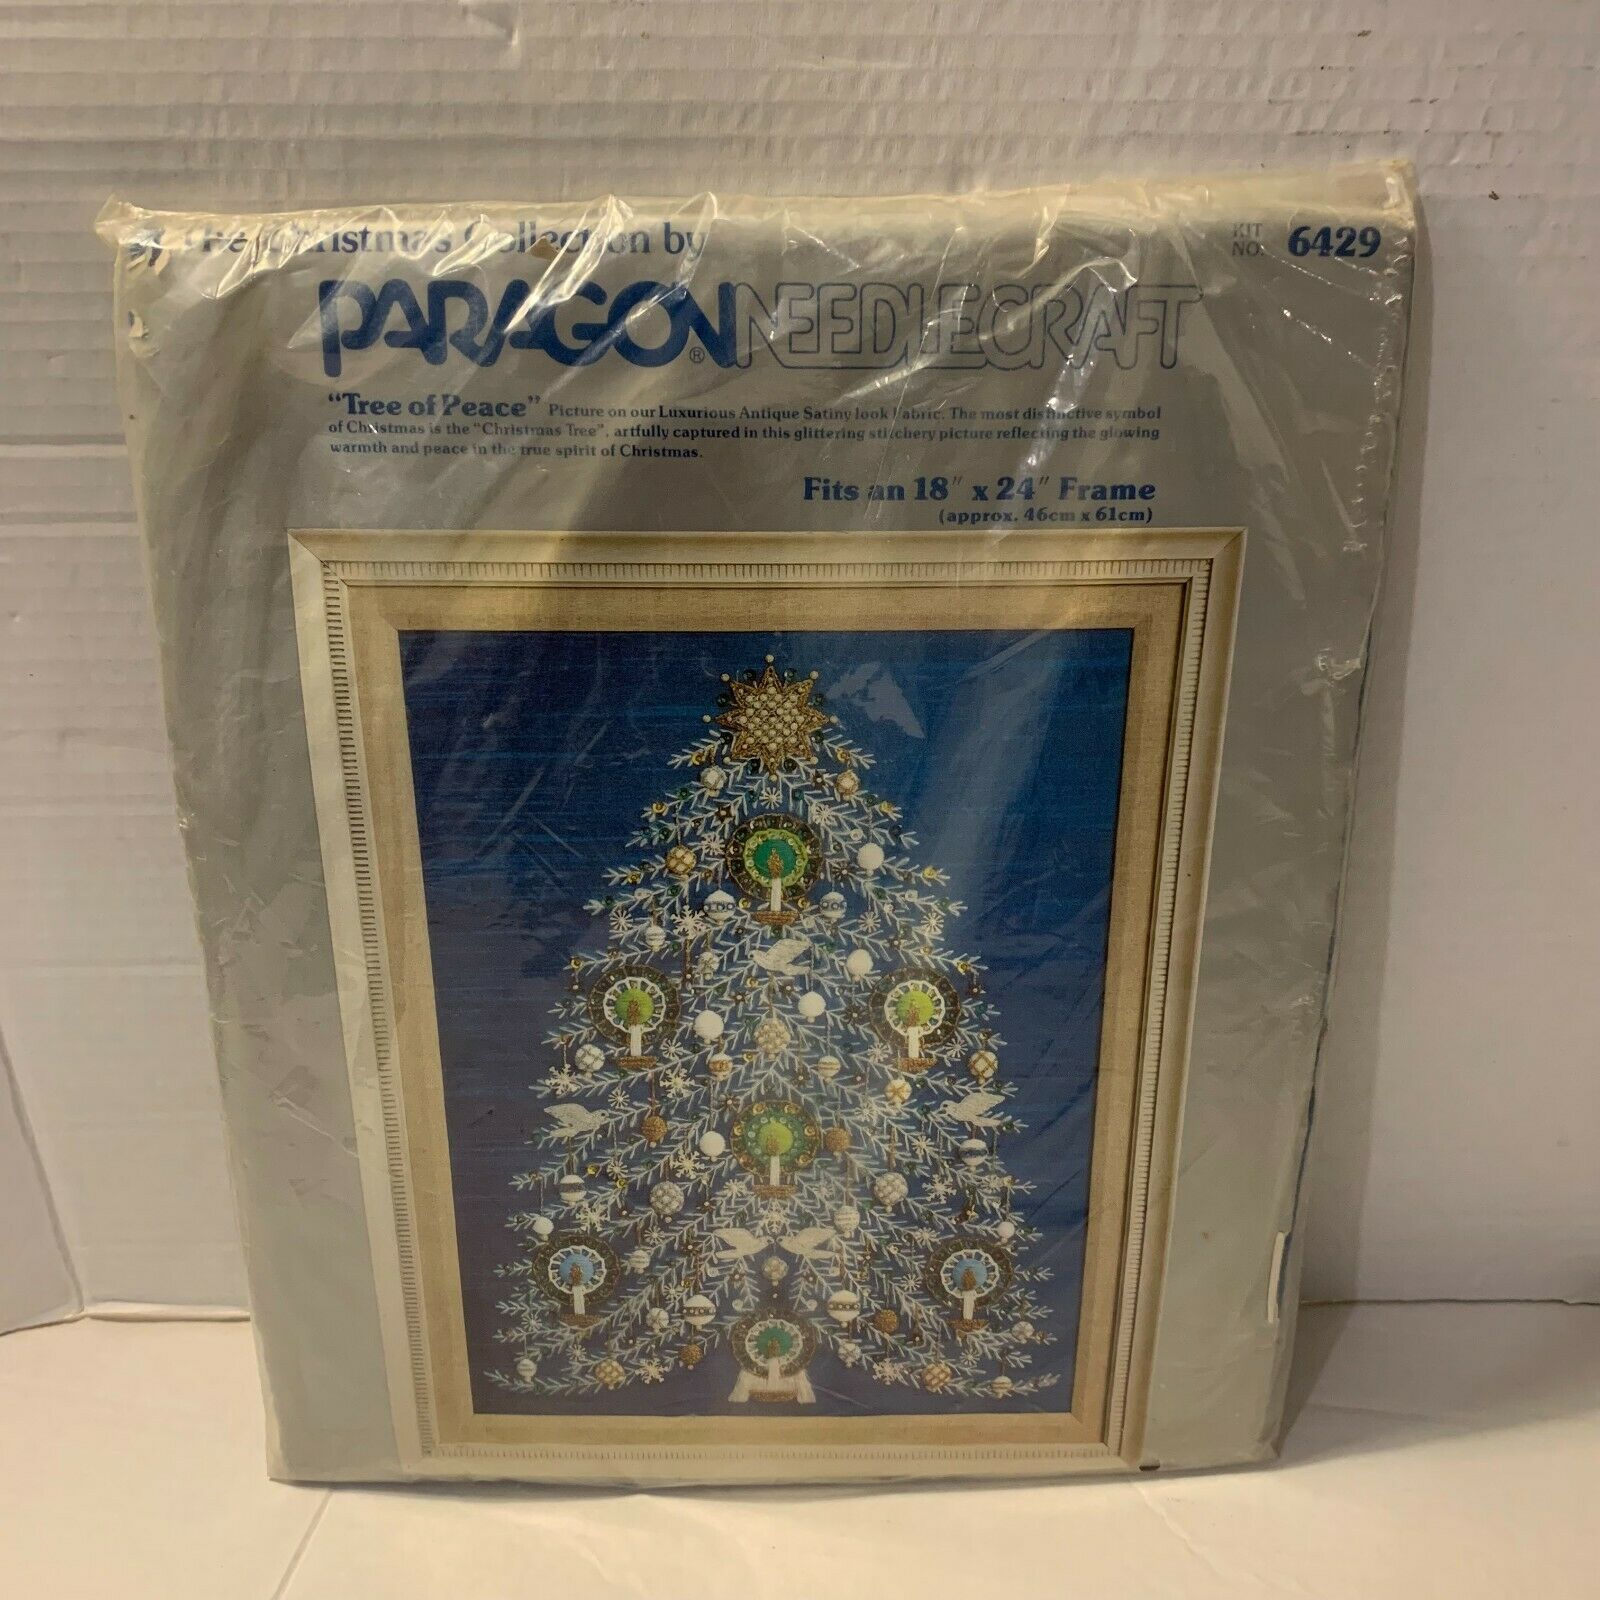 Paragon Needlecraft - Christmas “tree Of Peace” 18x24 Crewel Embroidery Kit 6429